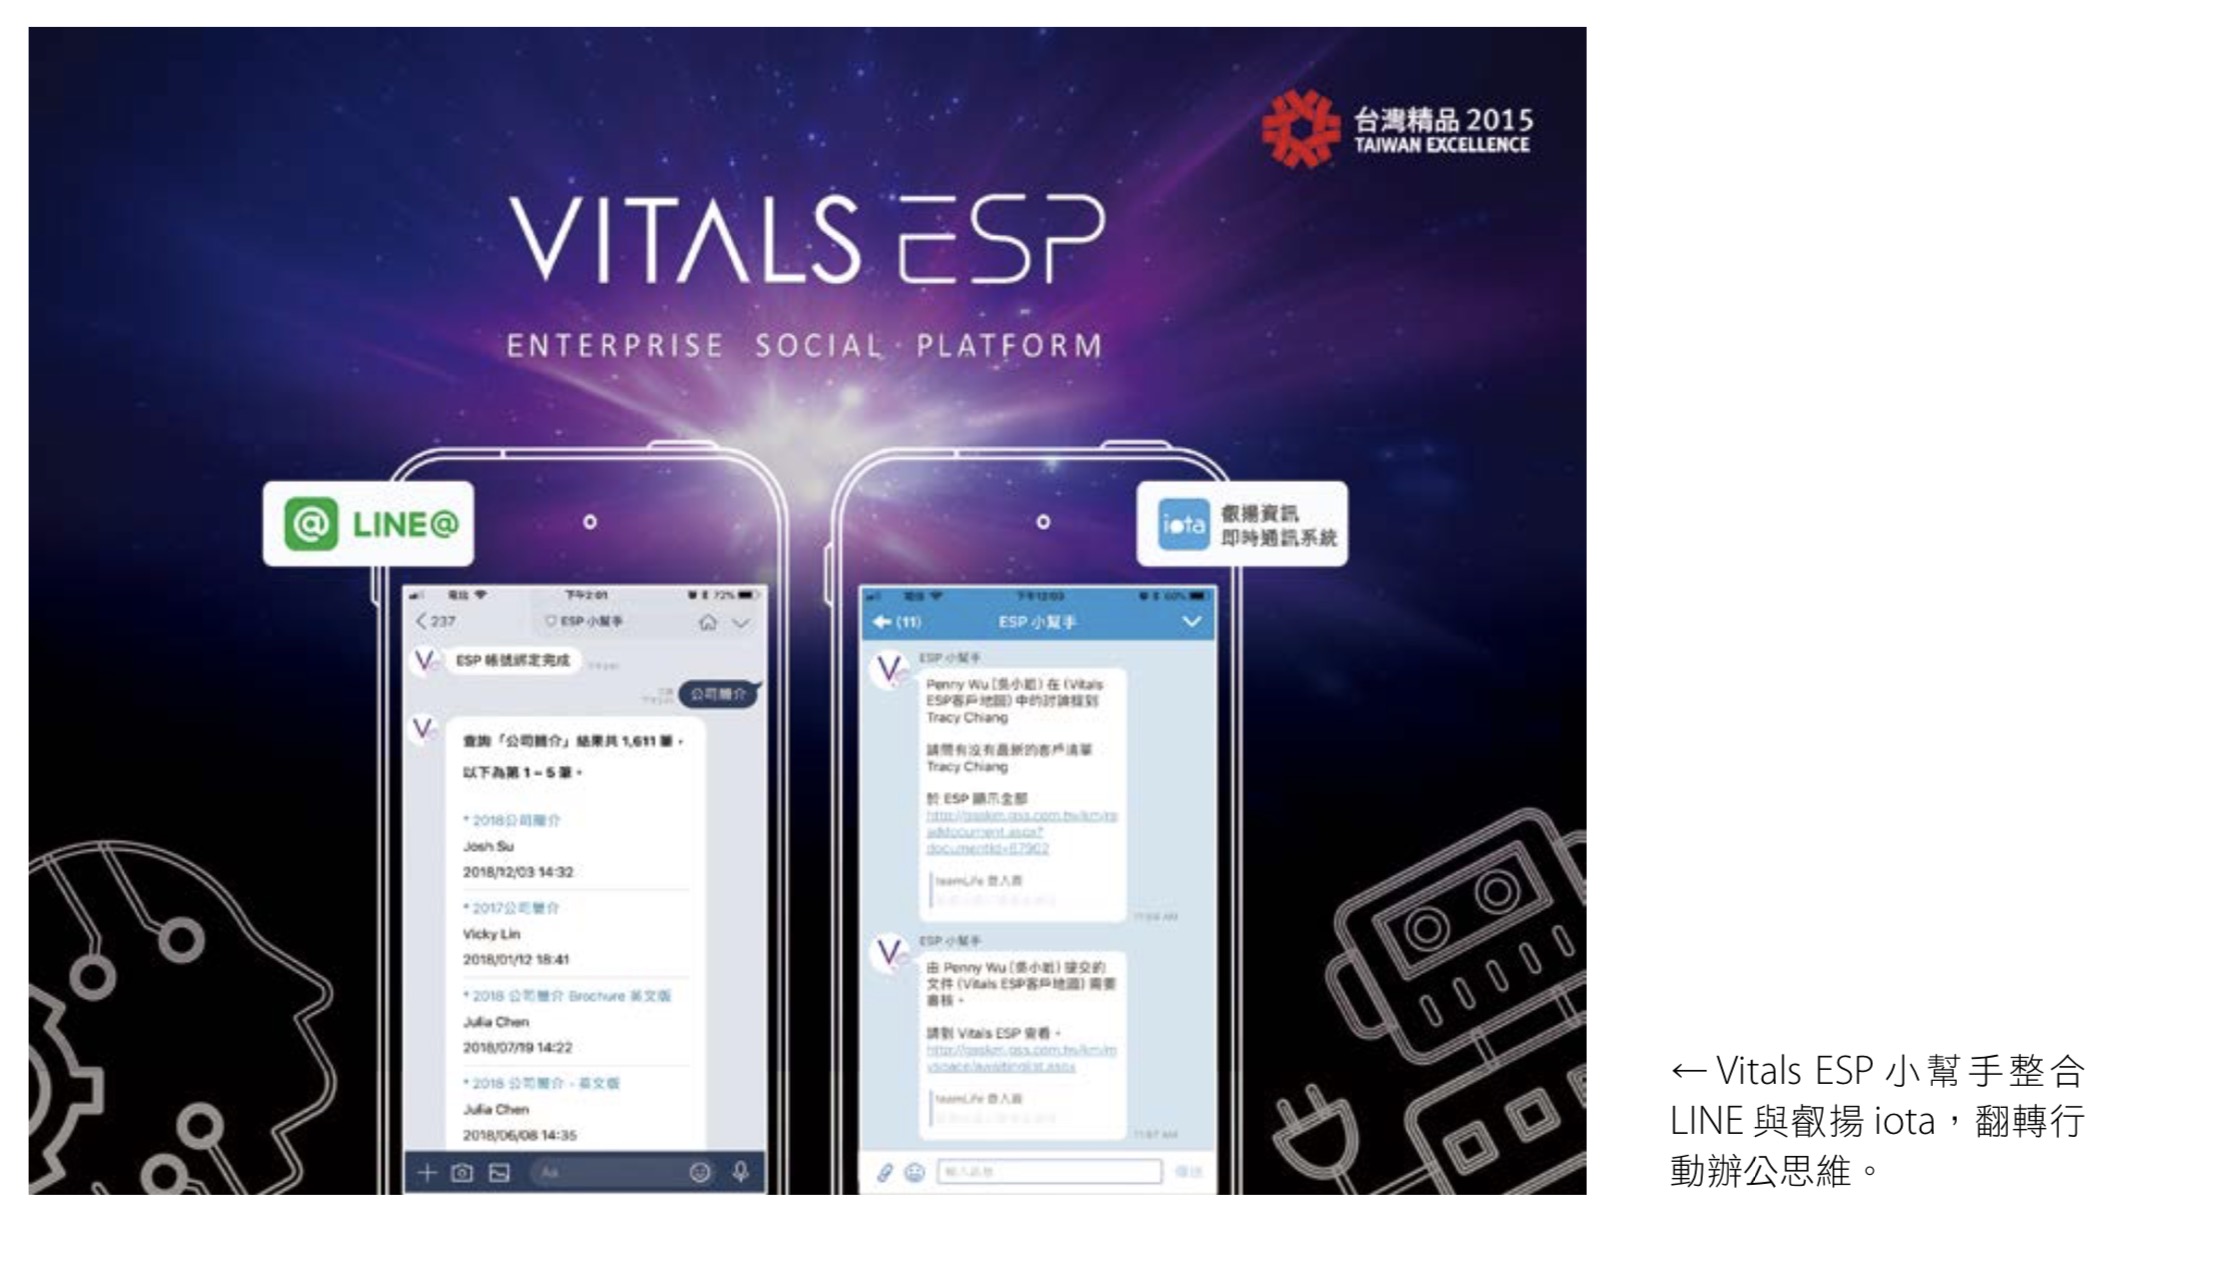 Vitals ESP 小幫手整合 LINE 與叡揚 iota，翻轉行 動辦公思維